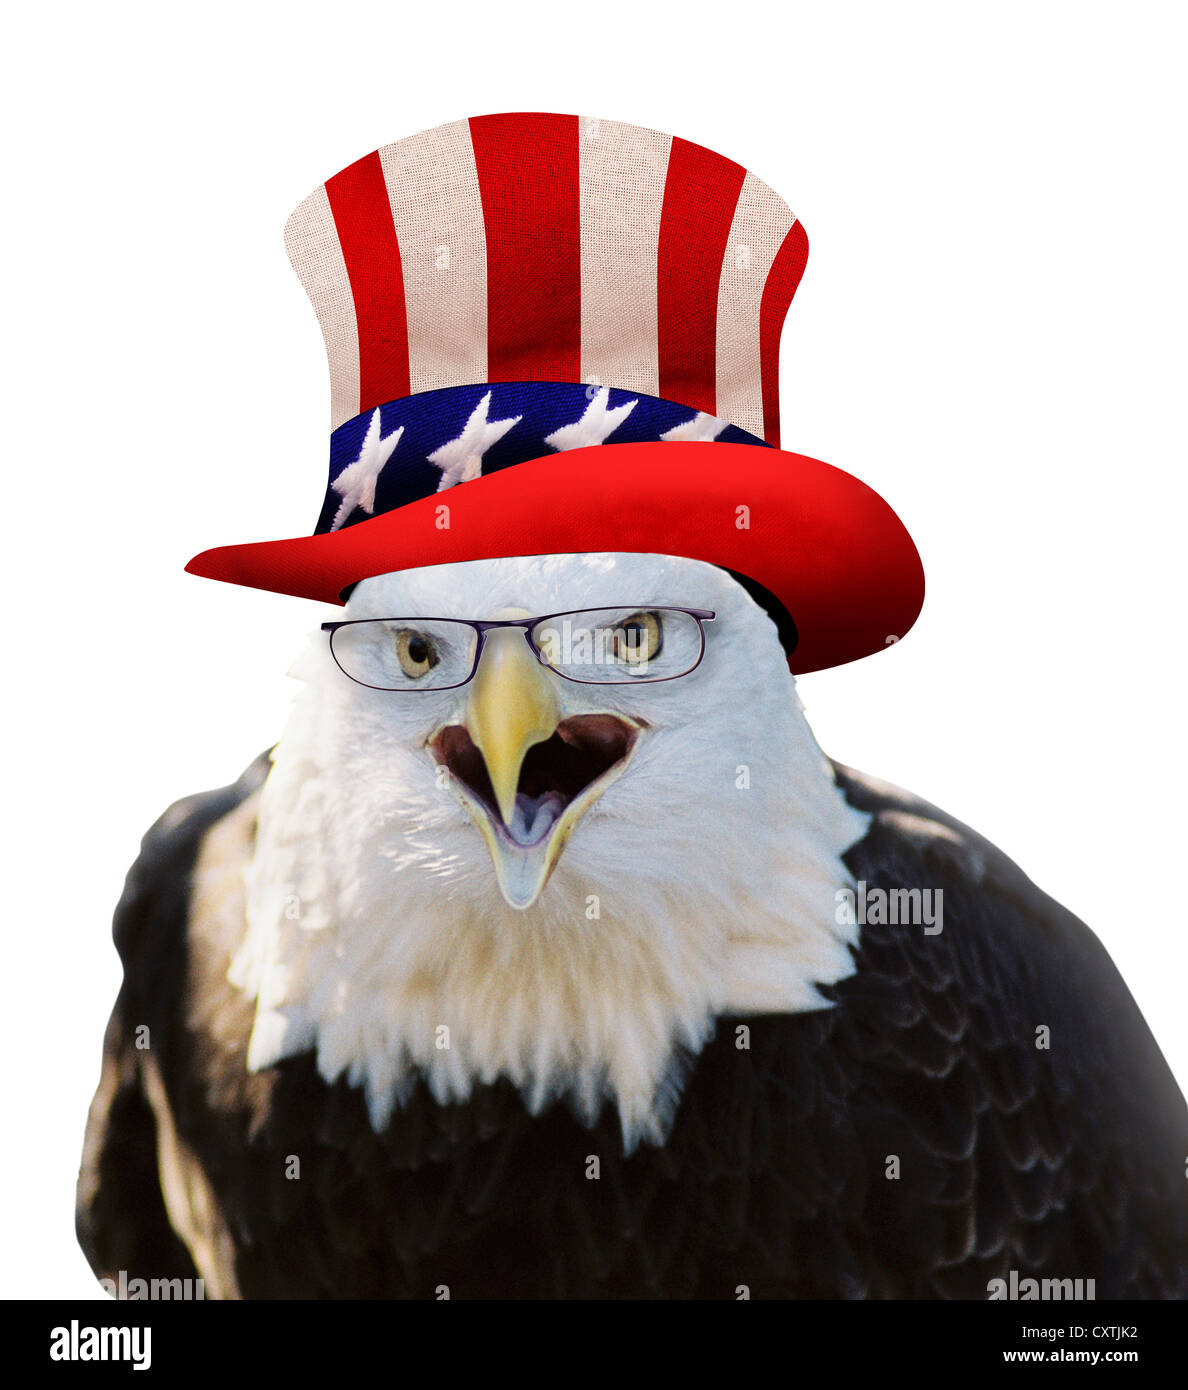 https://c8.alamy.com/comp/CXTJK2/american-bald-eagle-wearing-uncle-hat-CXTJK2.jpg